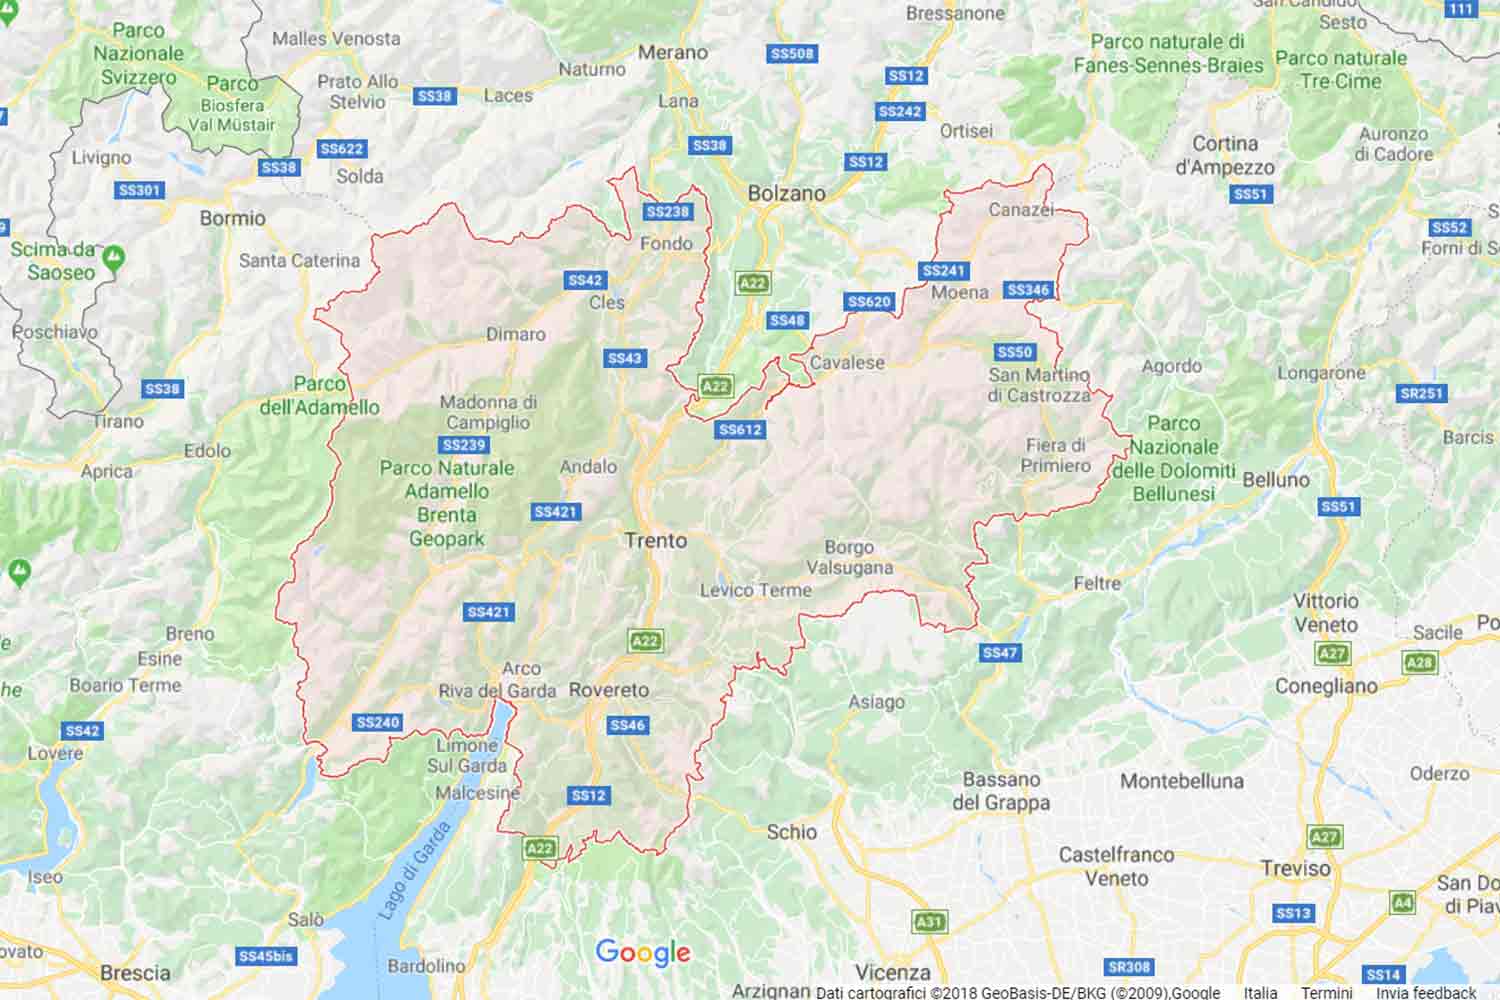 Trentino - Trento - Frassilongo Preventivi Veloci google maps